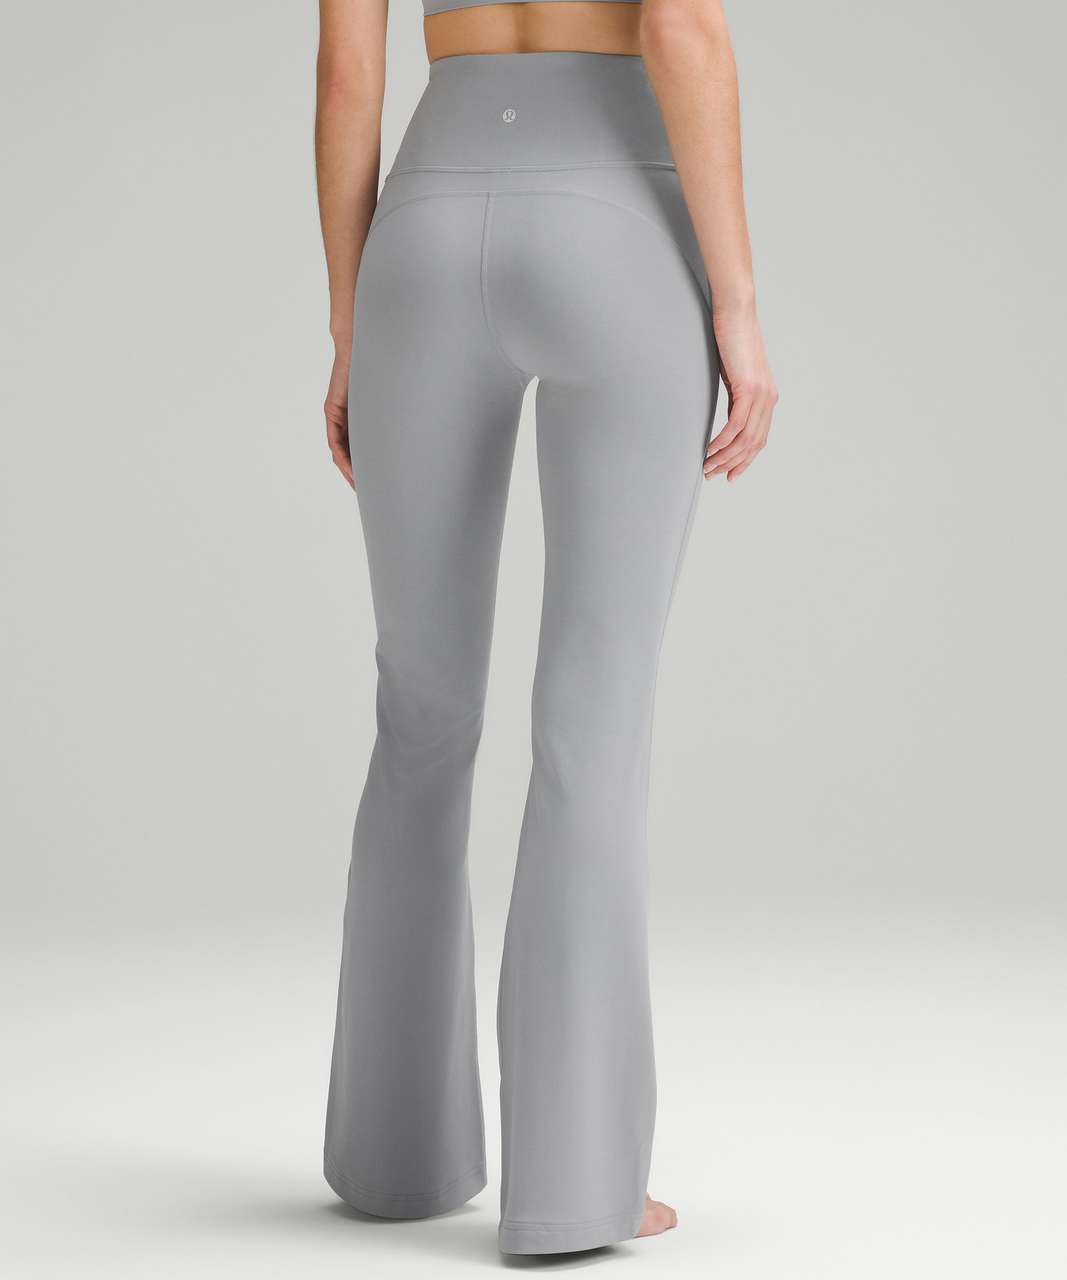 Lululemon Grey Low Rise Flare Pants  Flare pants, Clothes design, Flares